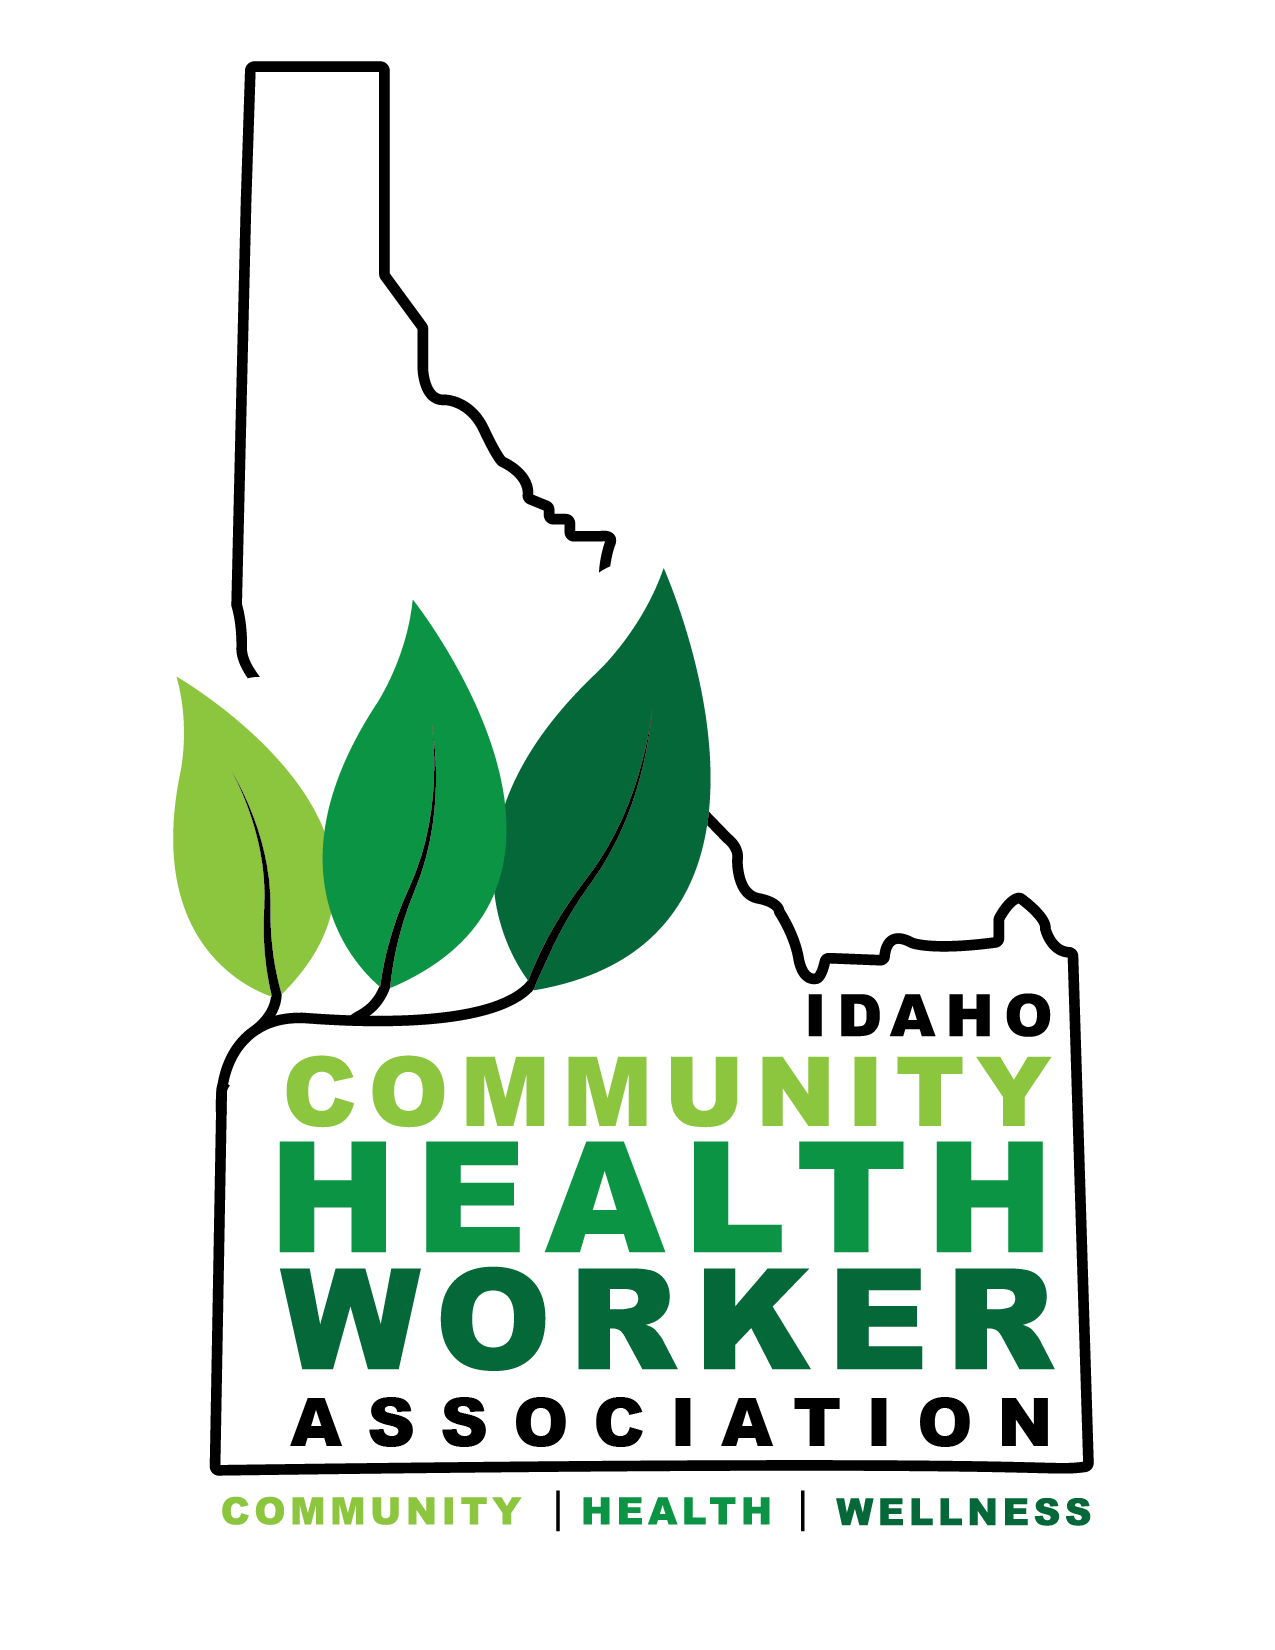 Idaho Community Health Worker Association